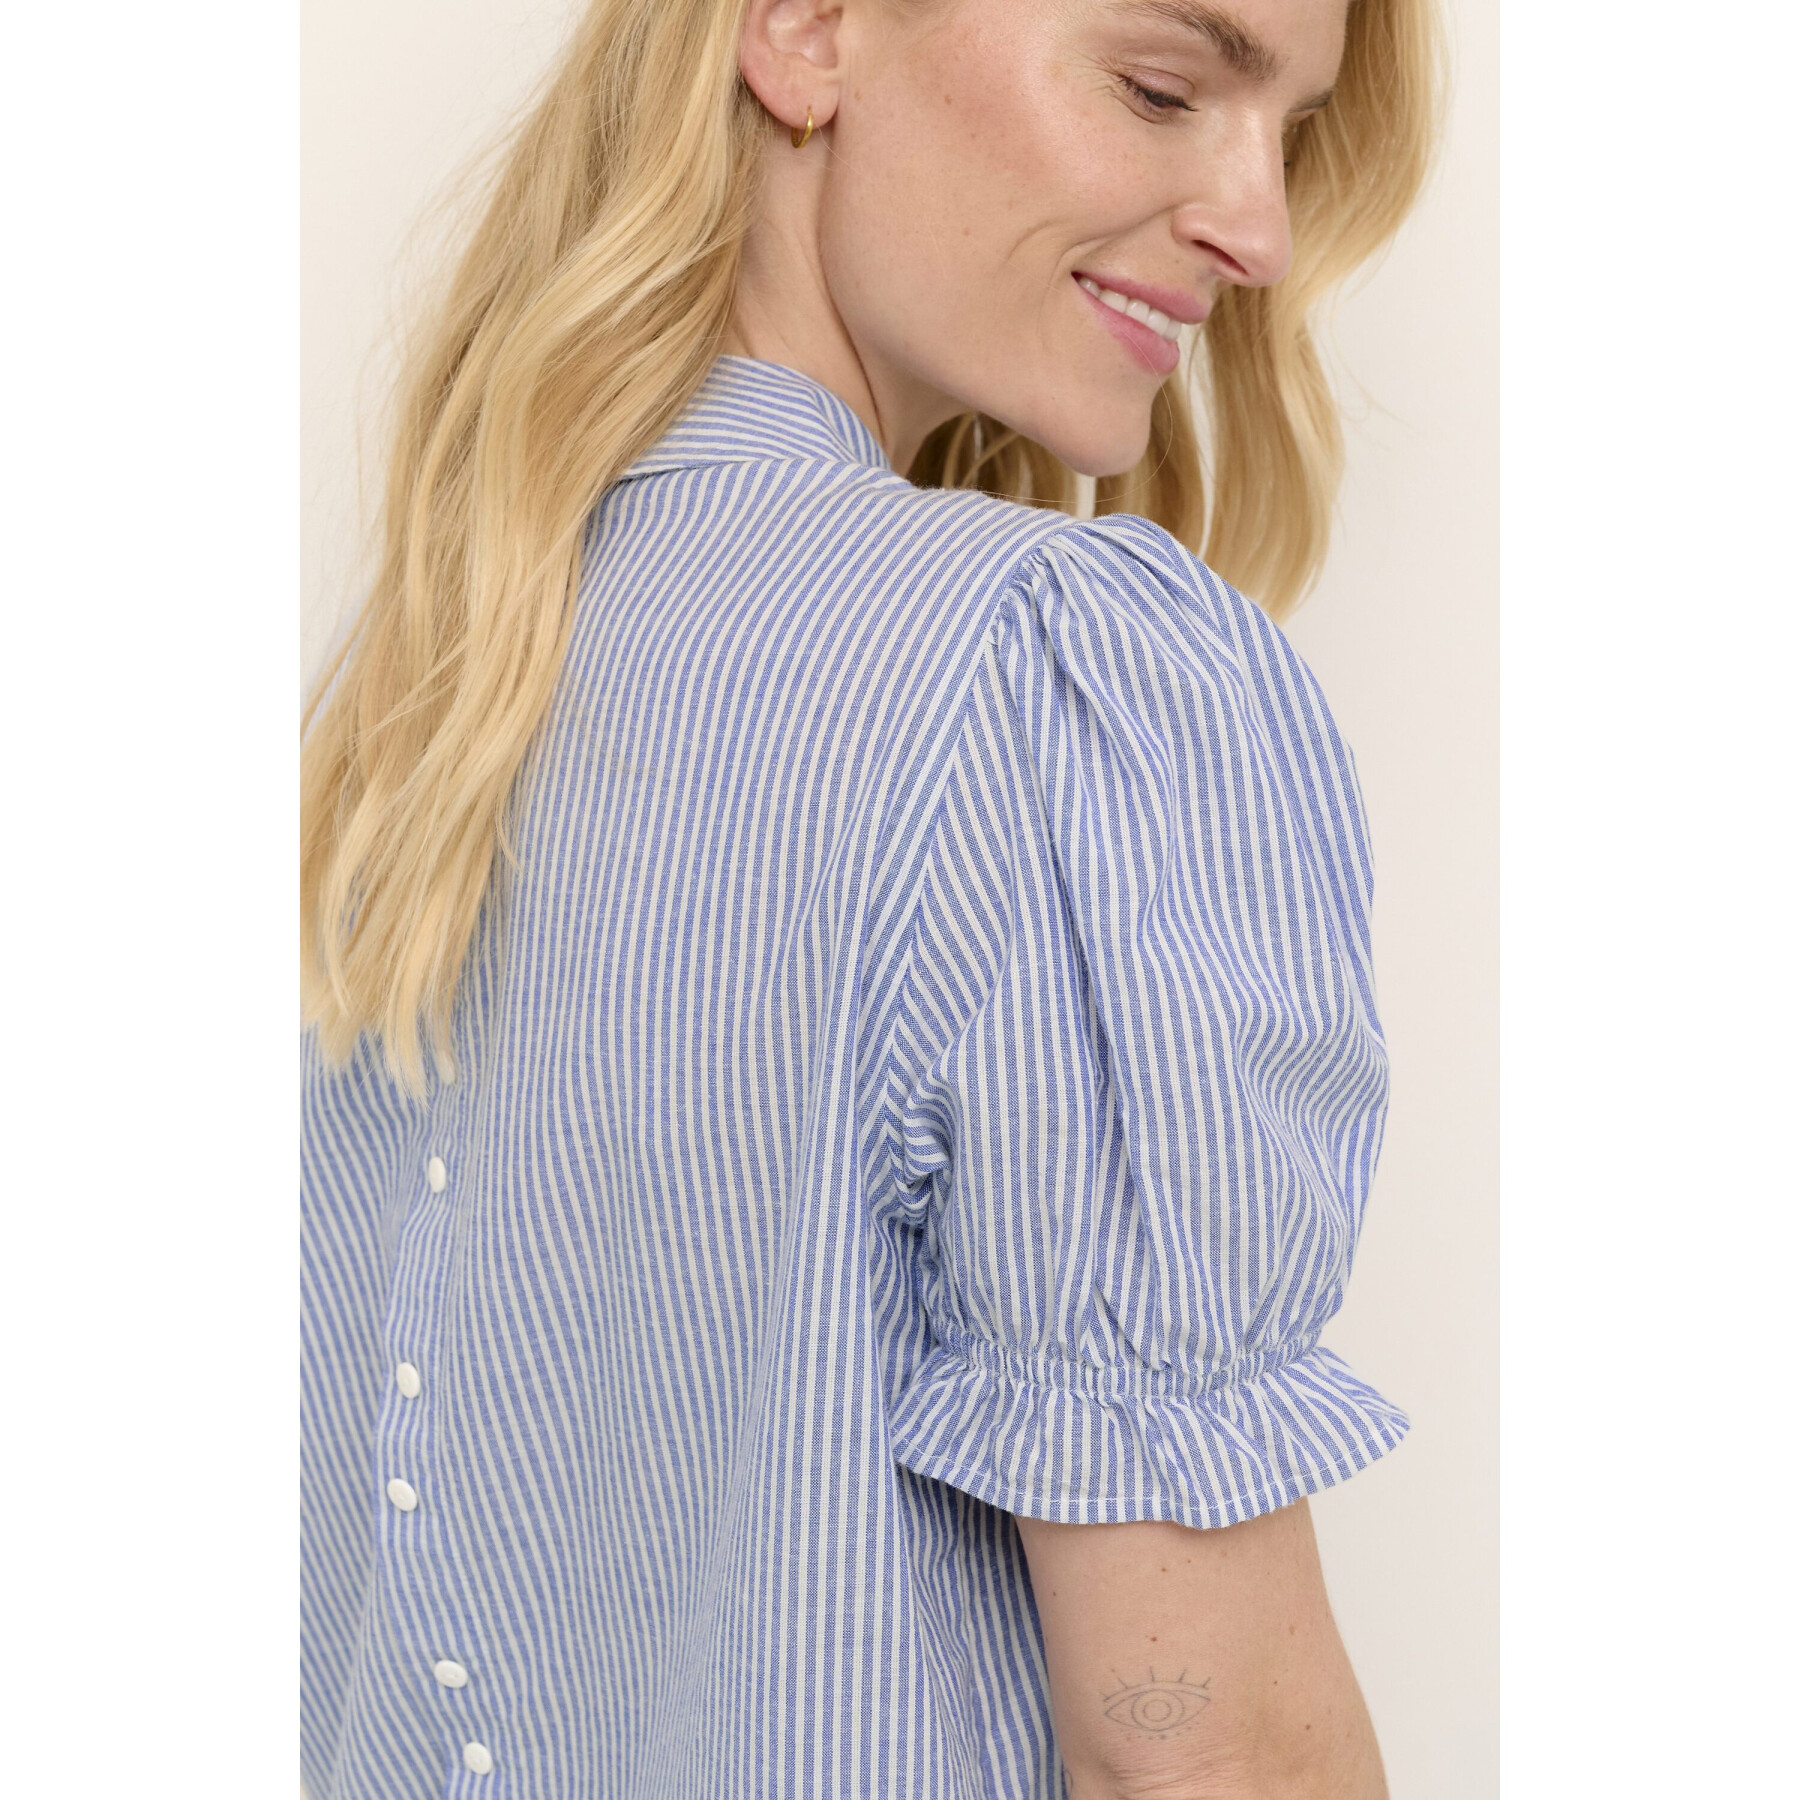 Women's blouse CULTURE Olena